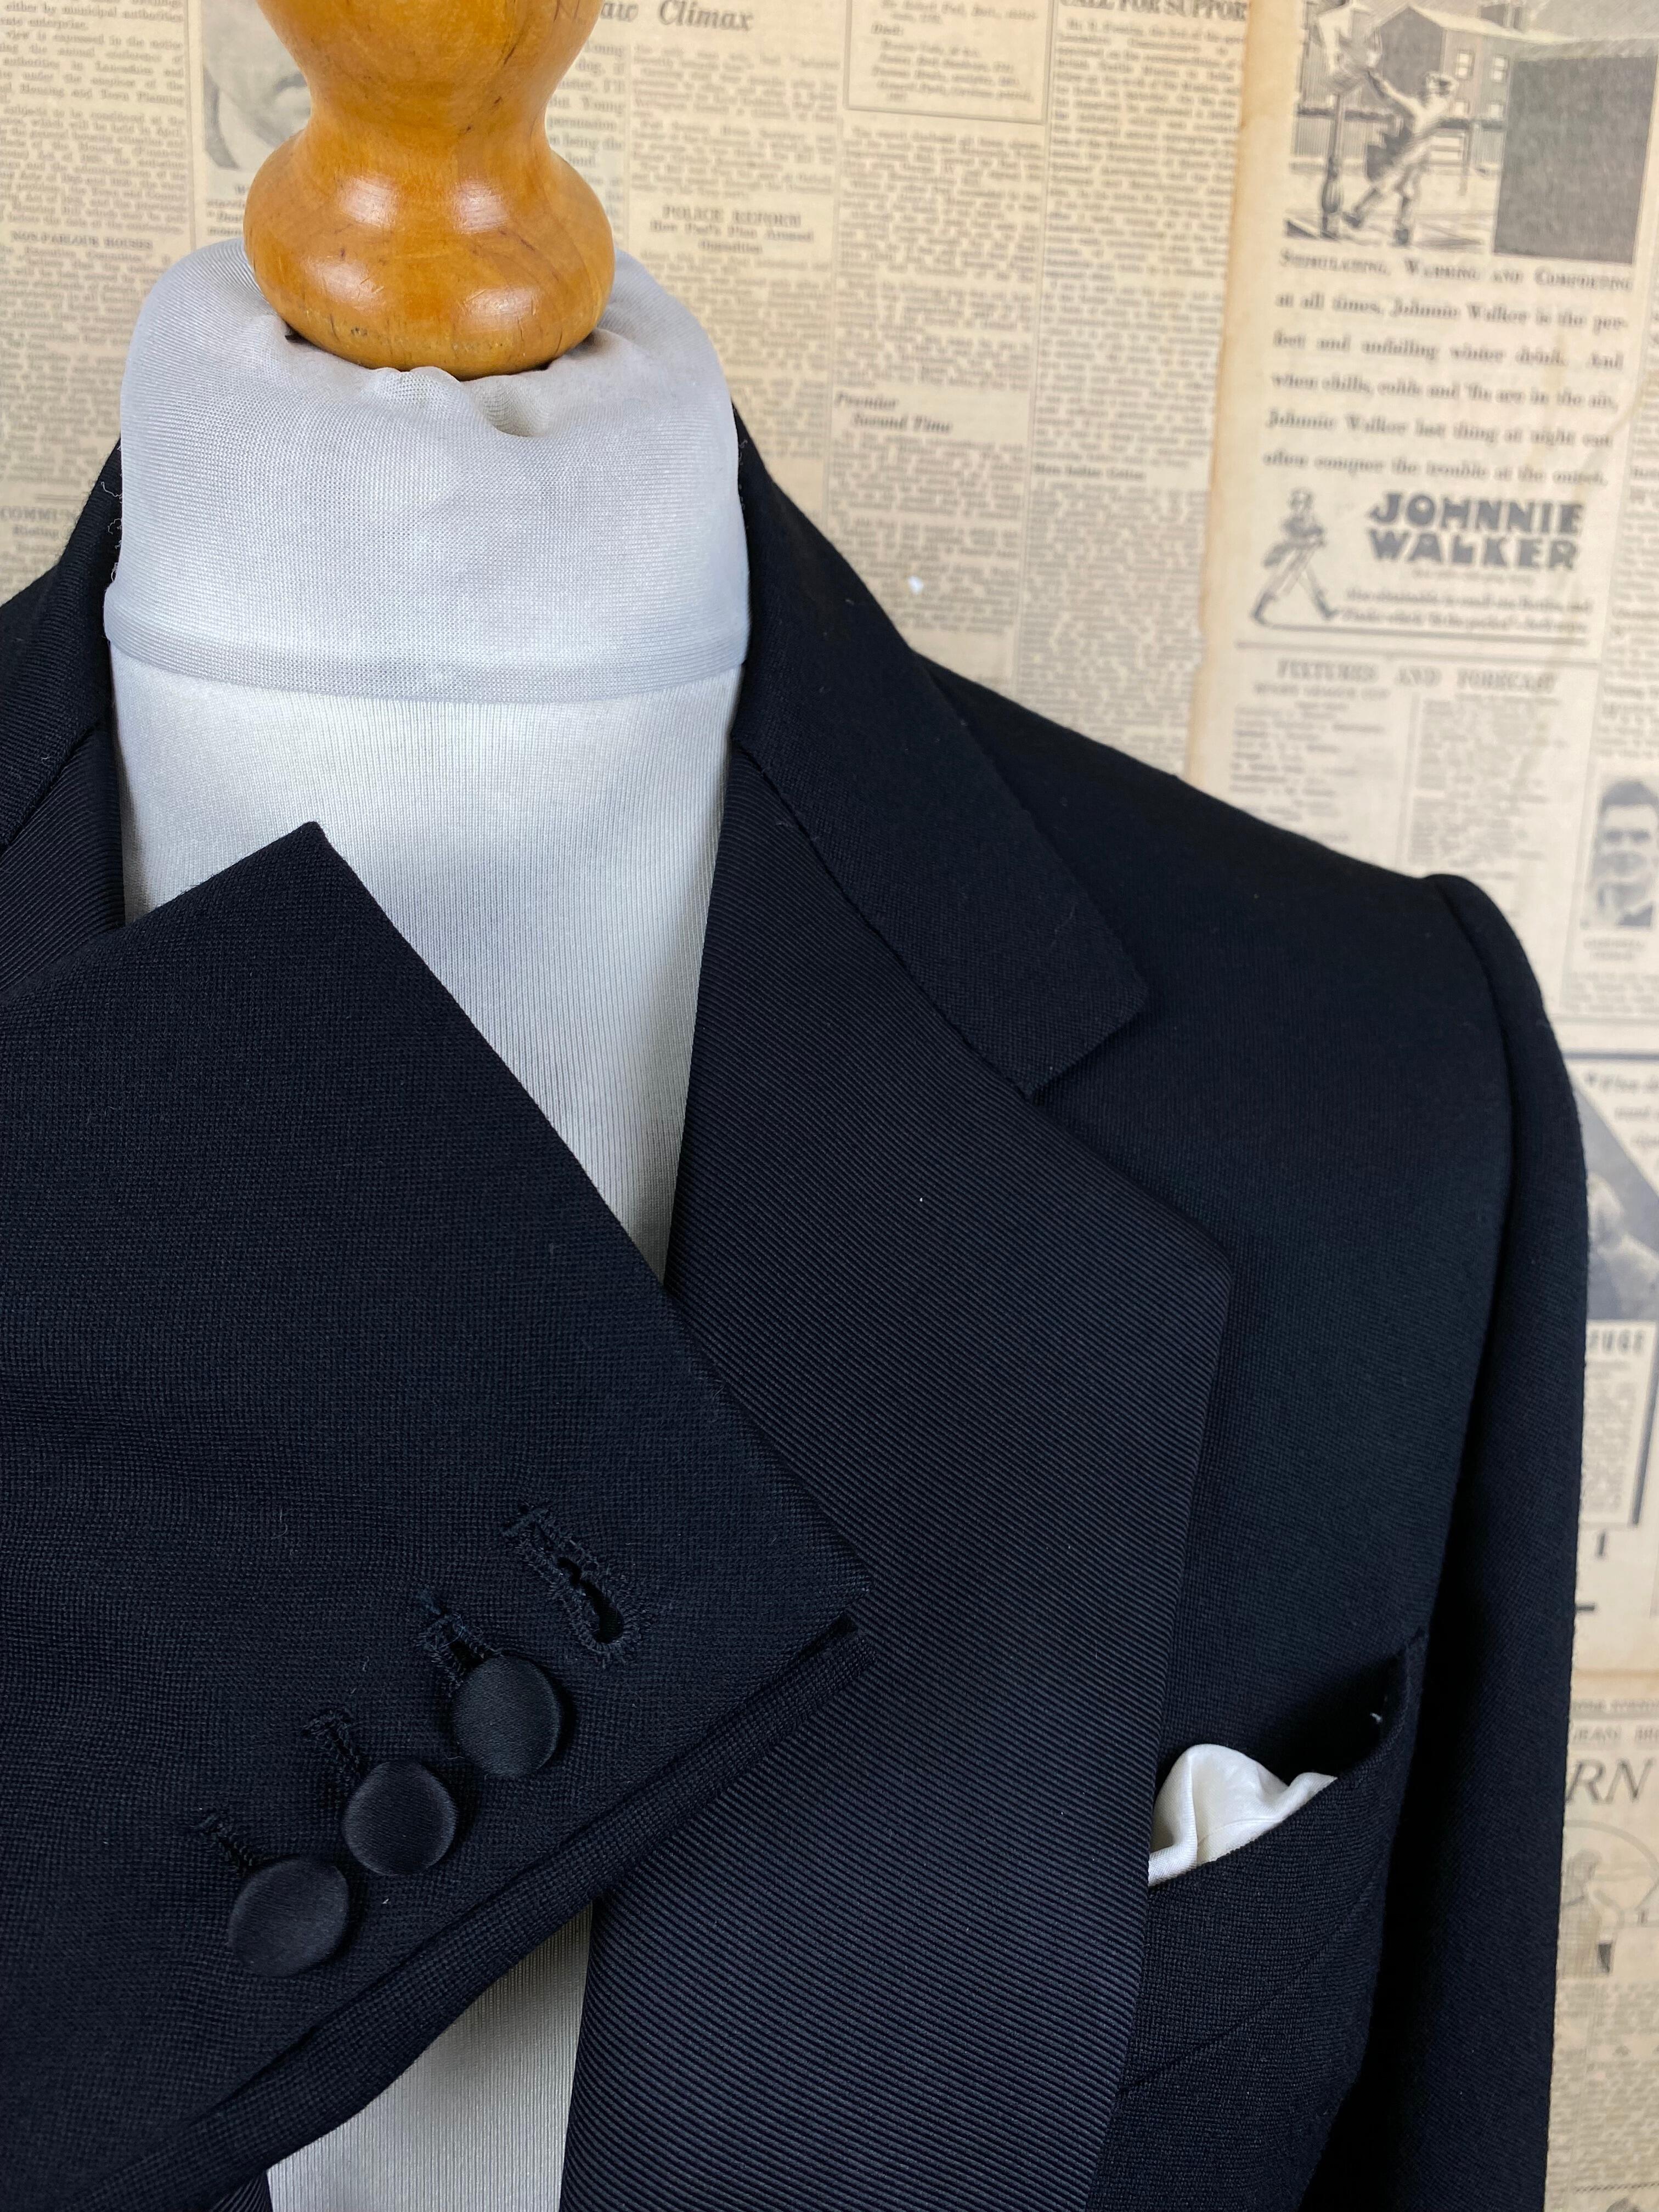 Vintage bespoke Maurice Sedwell dinner suit size 42 short